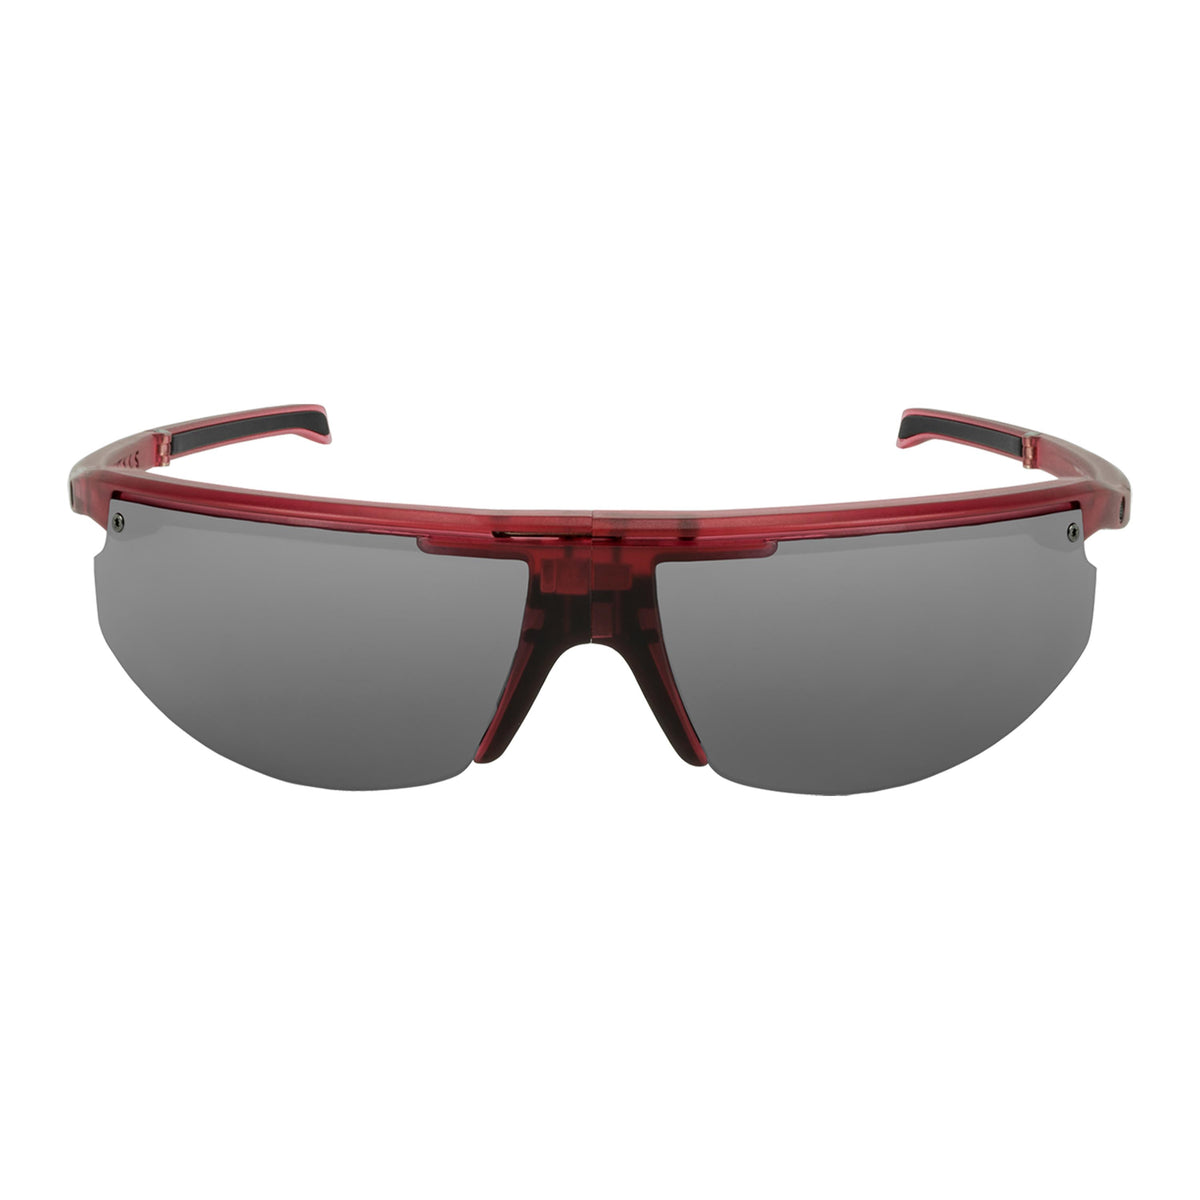 Popticals, Premium Compact Sunglasses, PopStar, 010040-BMUN, Polarized Sunglasses, Matte Black Frame, Gray Lenses w/Blue Mirror Finish, Front View